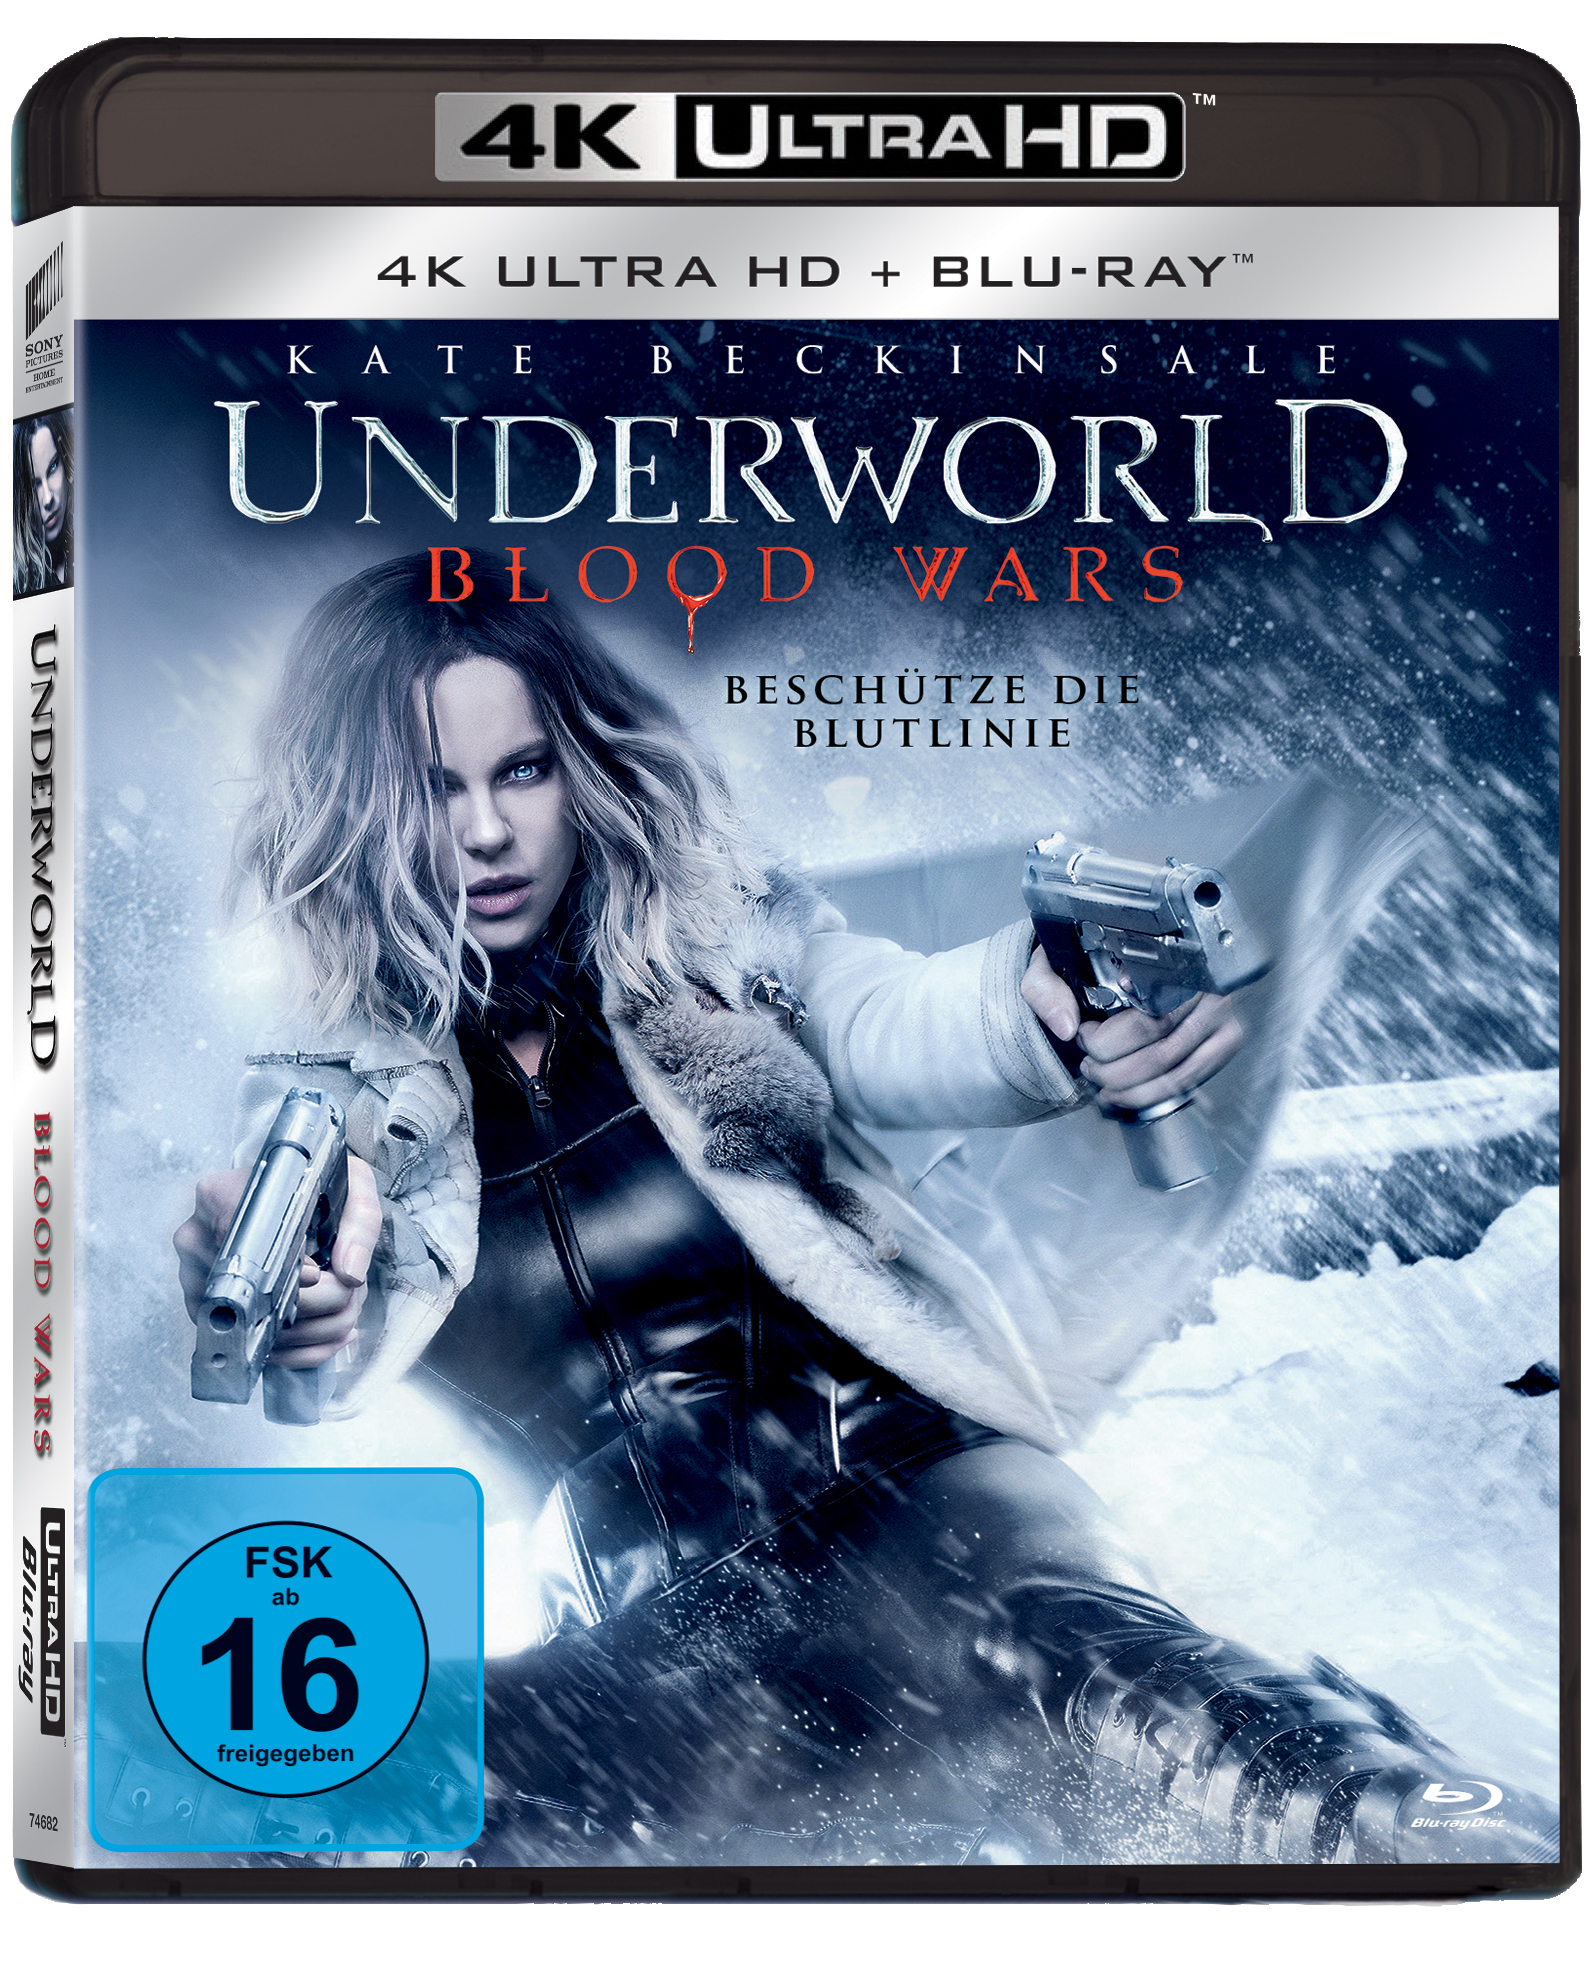 + Blu-ray Wars Underworld: 4K Blood HD Ultra Blu-ray